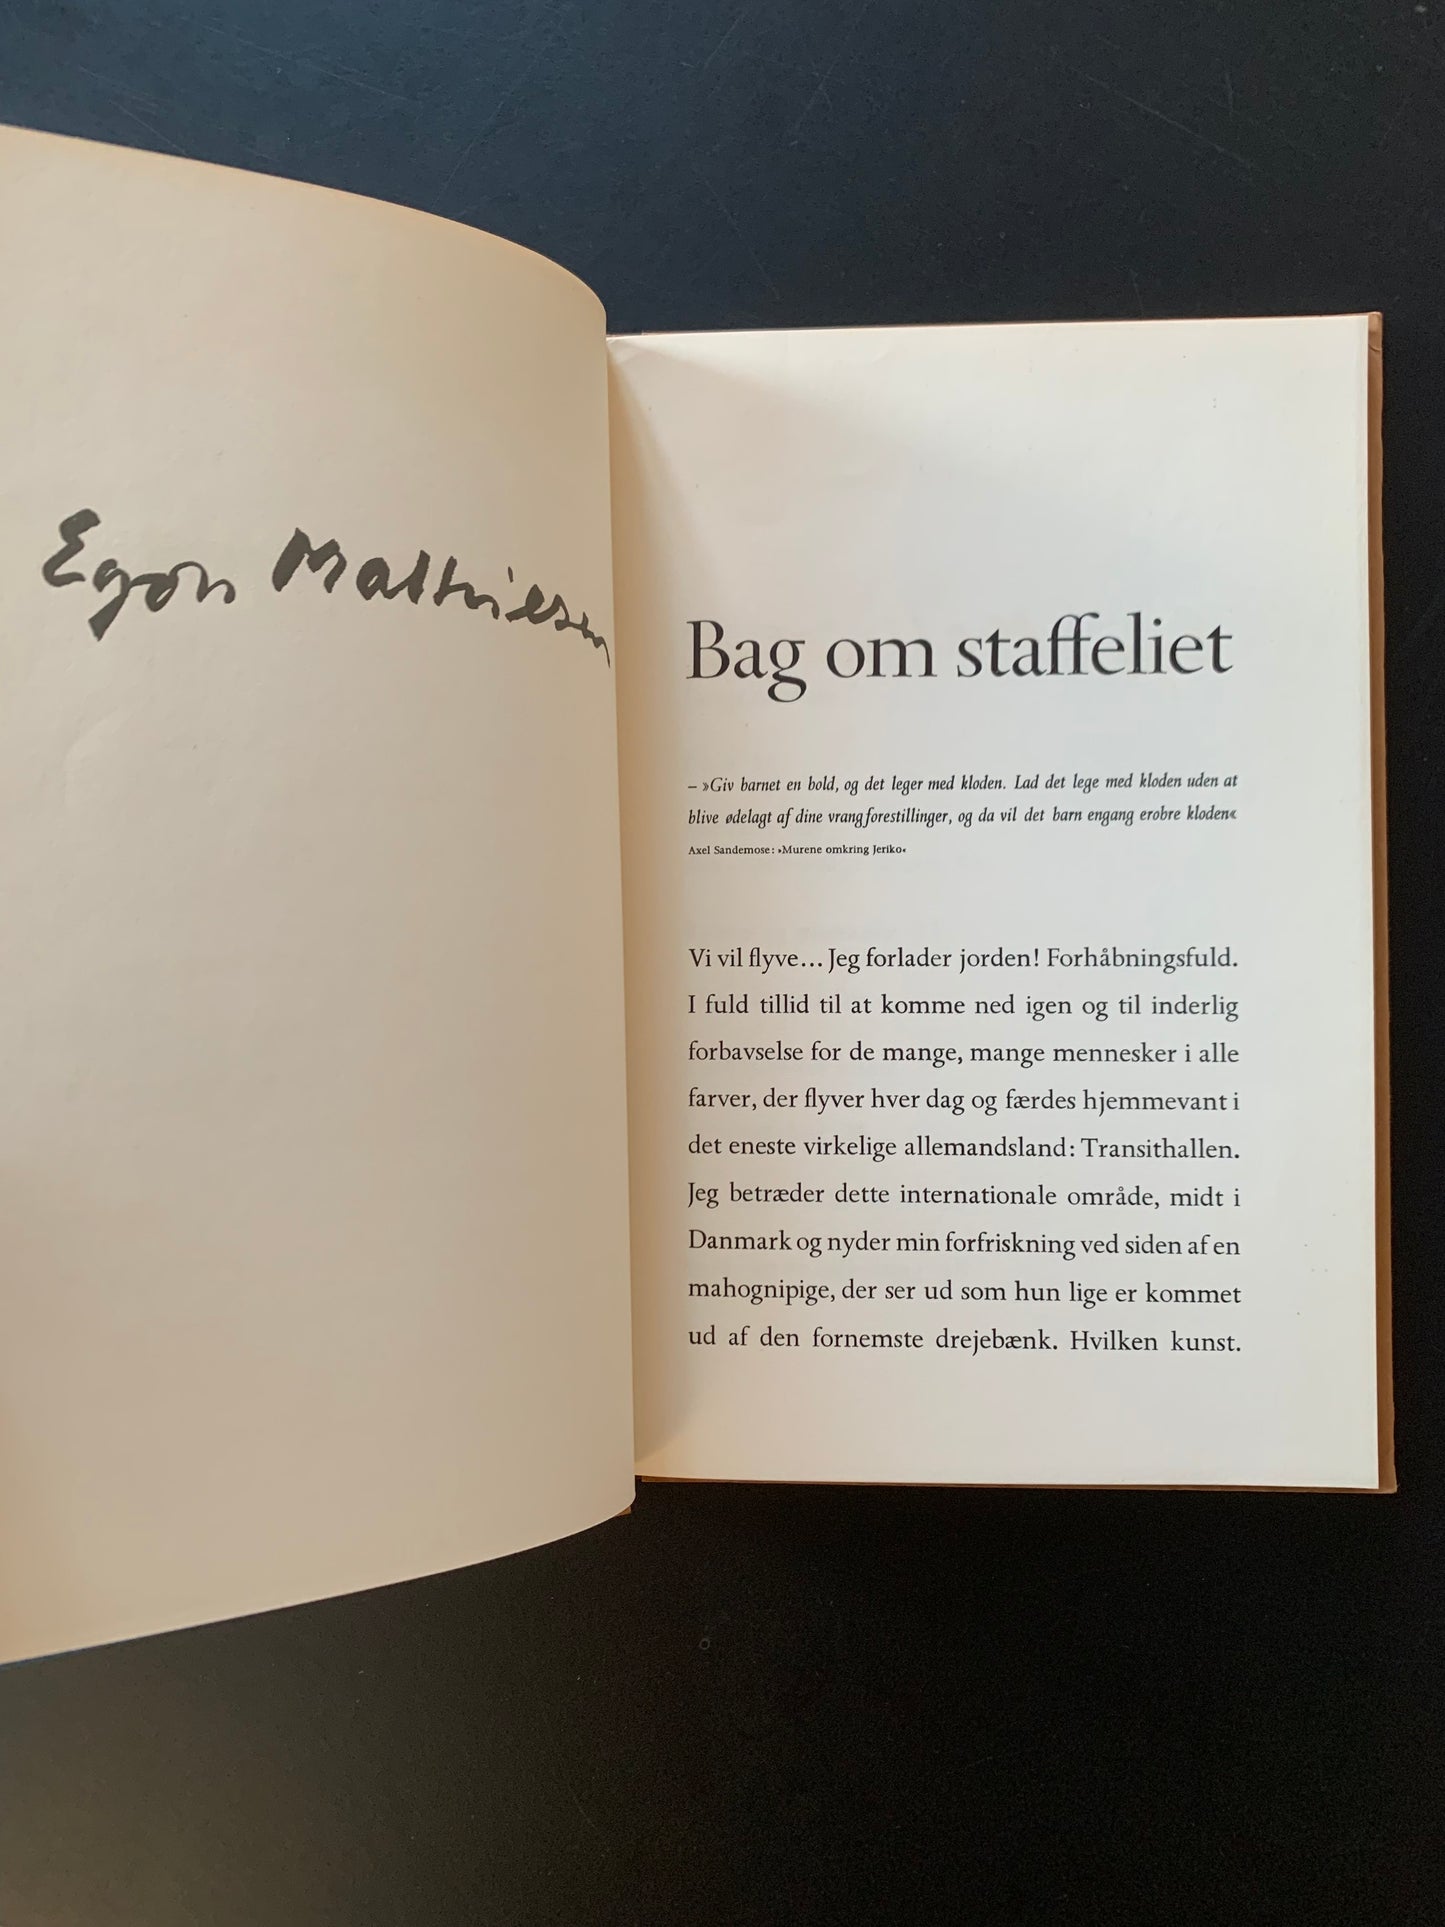 Egon Mathiesen. "Behind the Easel", 1962